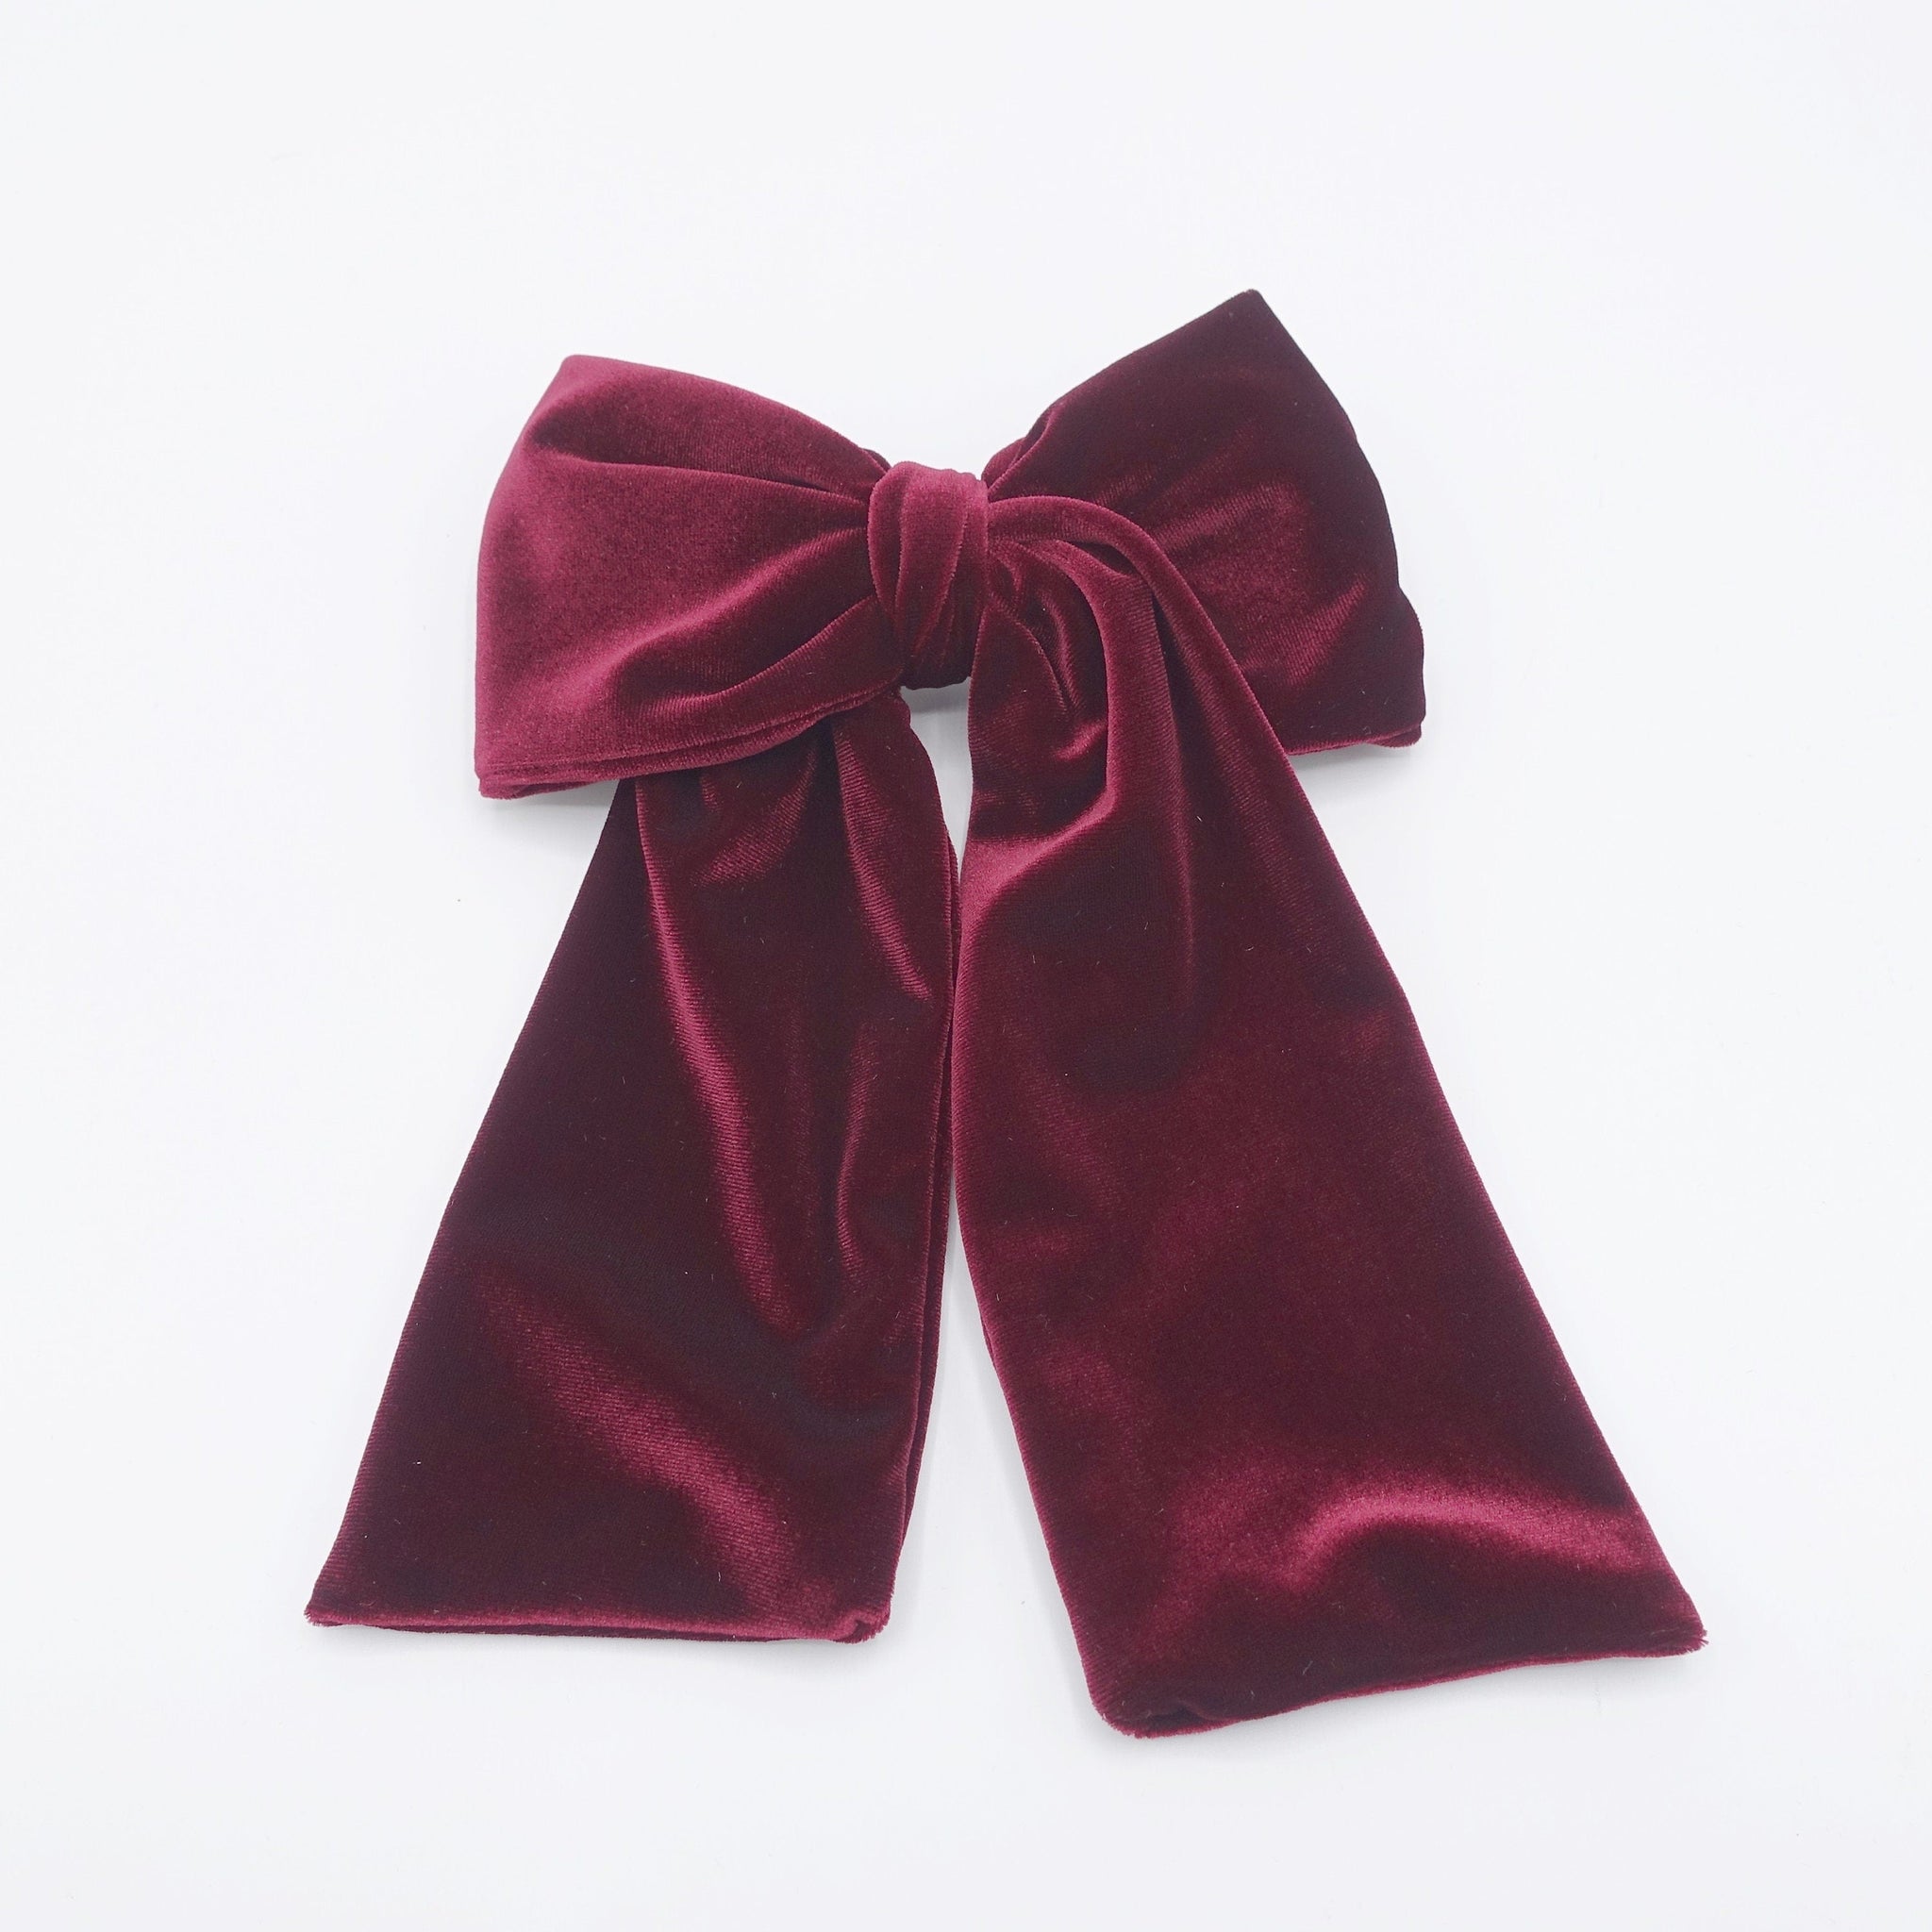 veryshine.com Barrette (Bow) Red wine velvet hair bow medium large sized hair accessory for women